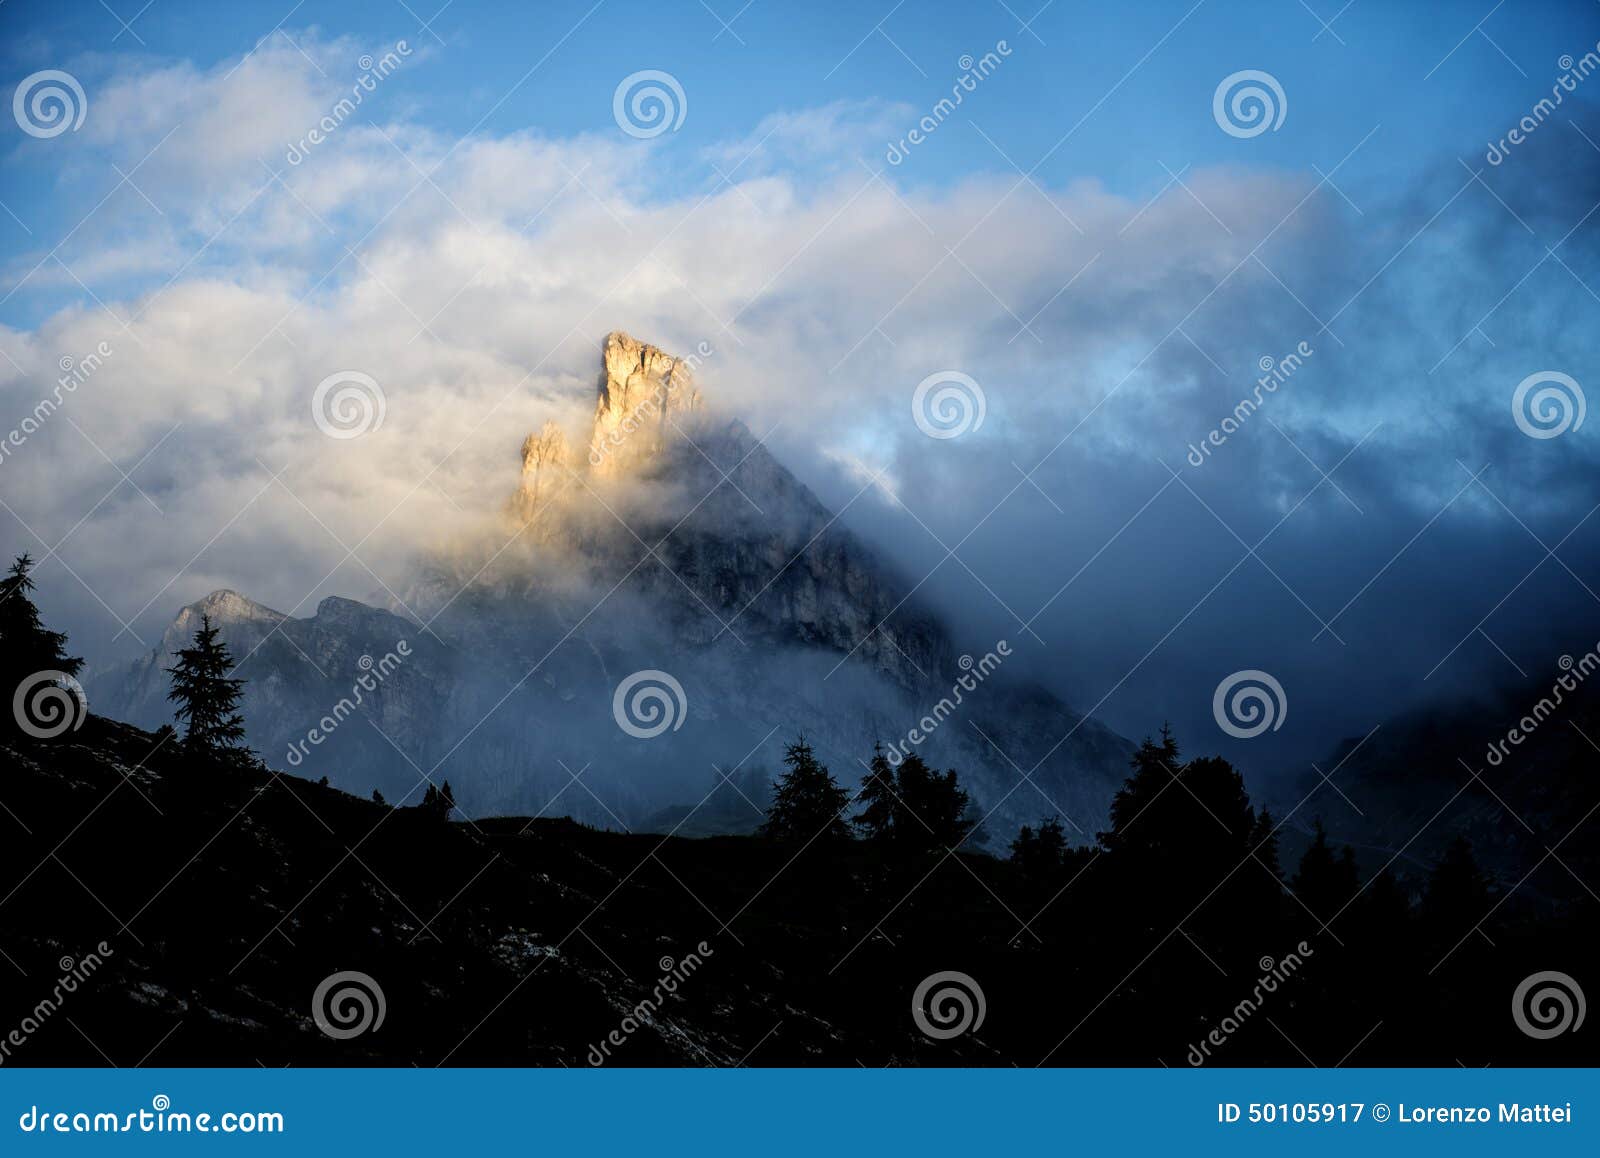 mount sass de stria at sunrise, blue sky with clouds and fog, falzarego pass, dolomites, veneto, italy